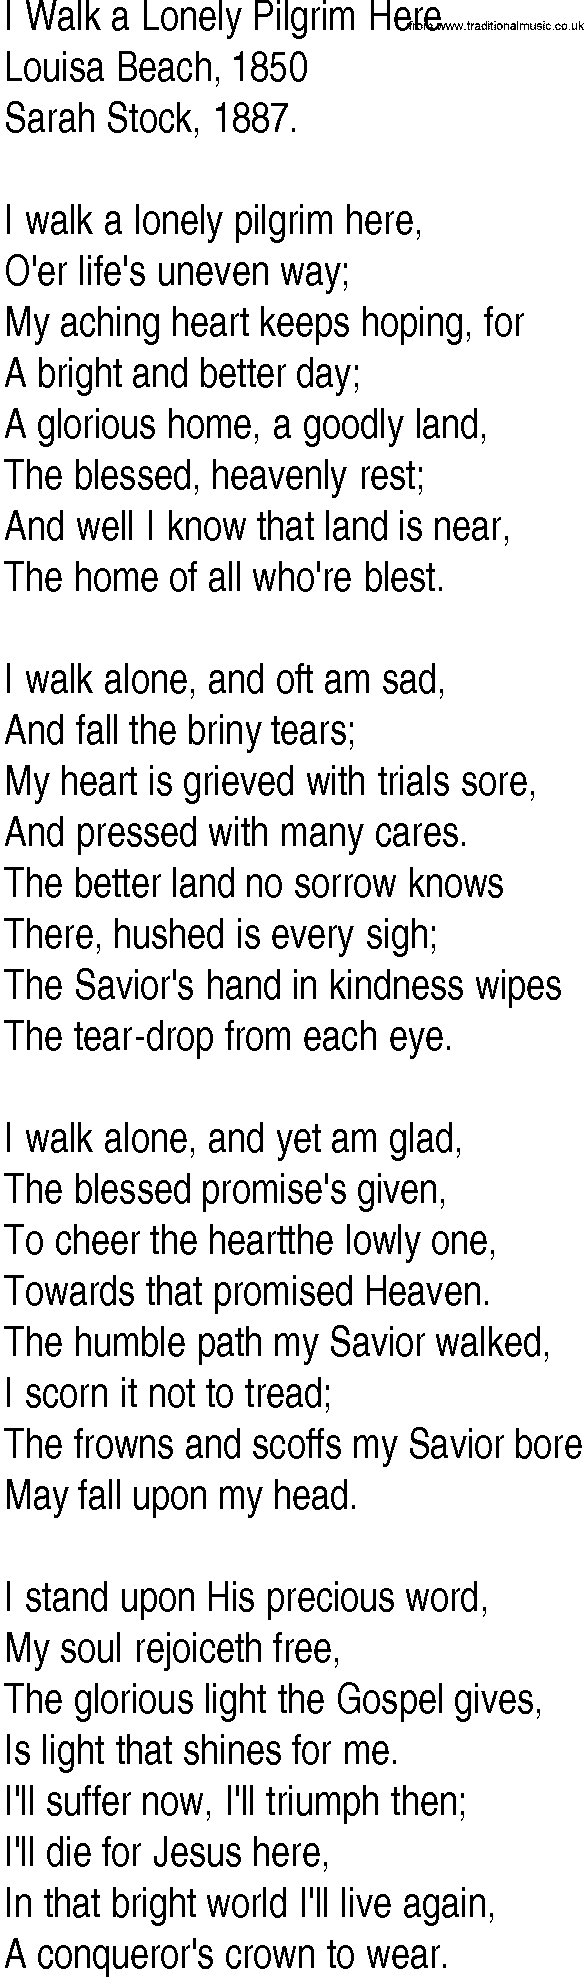 Hymn and Gospel Song: I Walk a Lonely Pilgrim Here by Louisa Beach lyrics